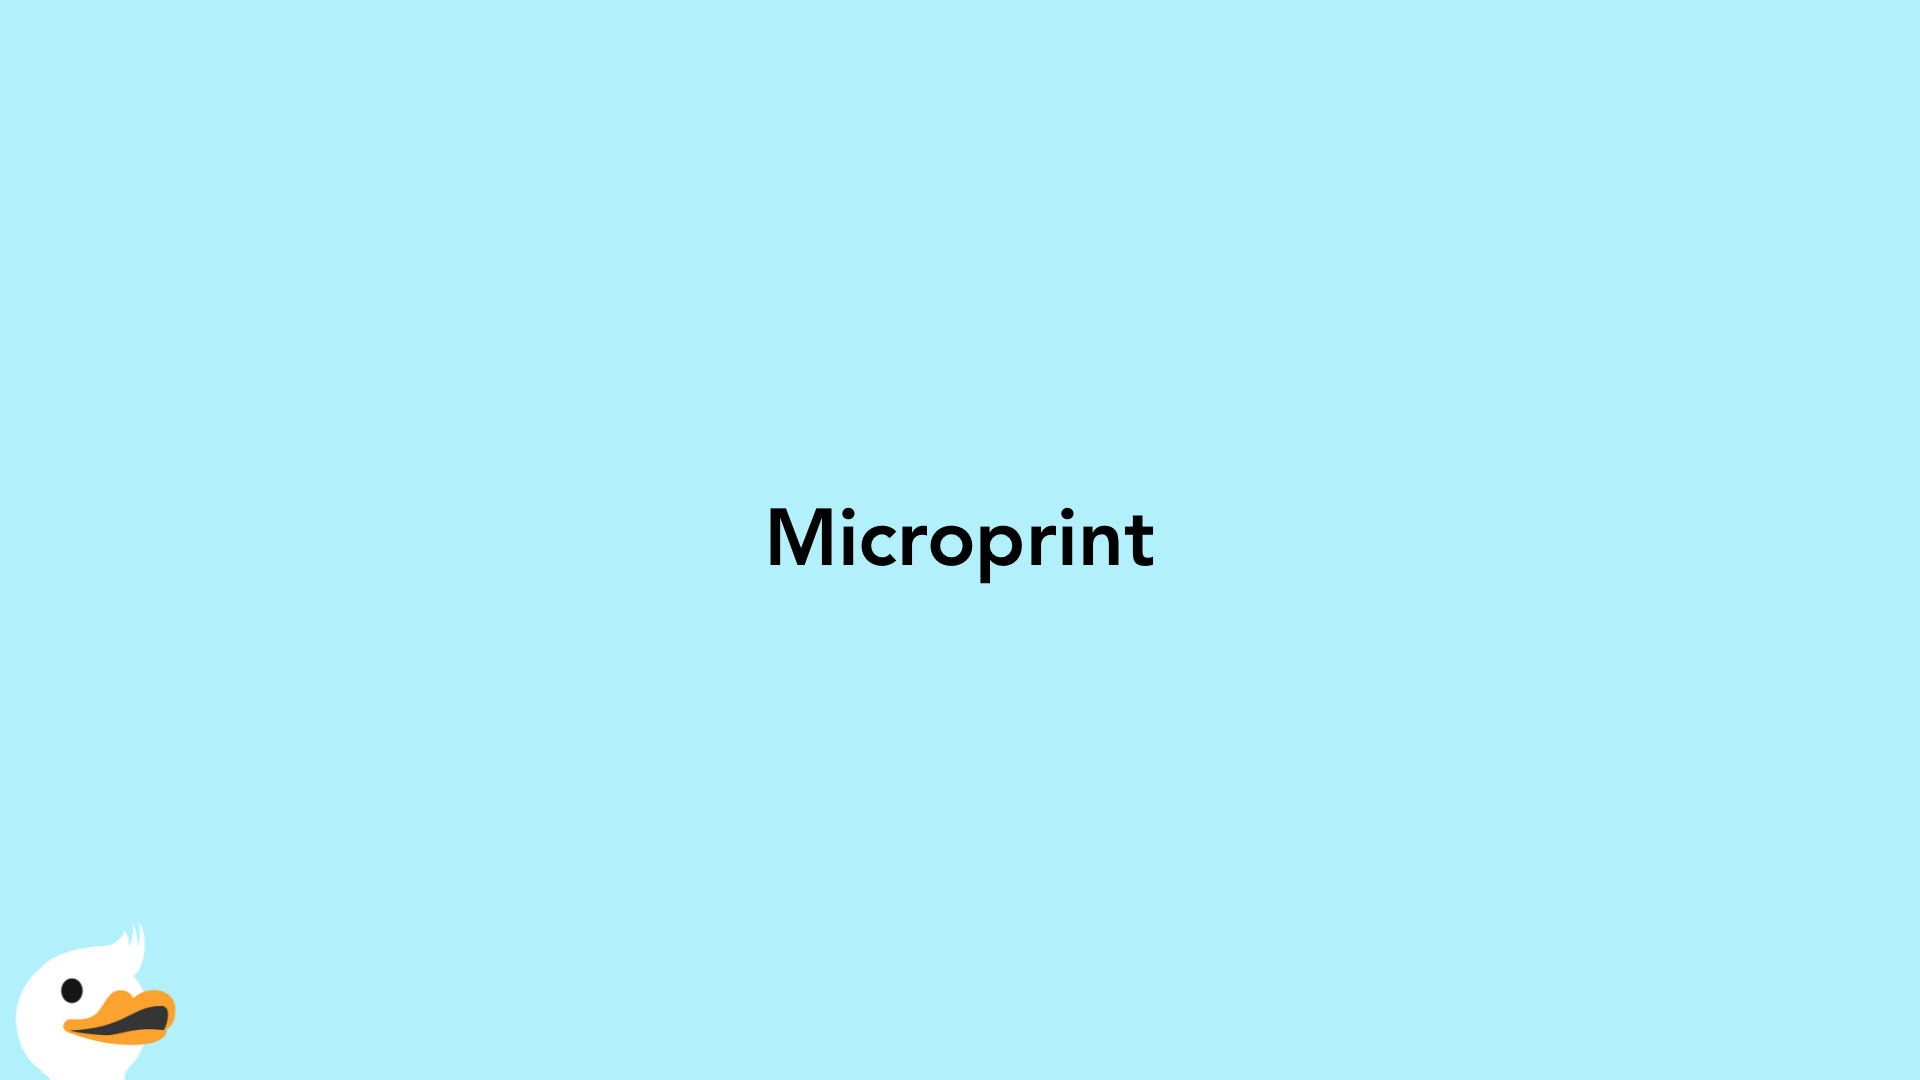 Microprint